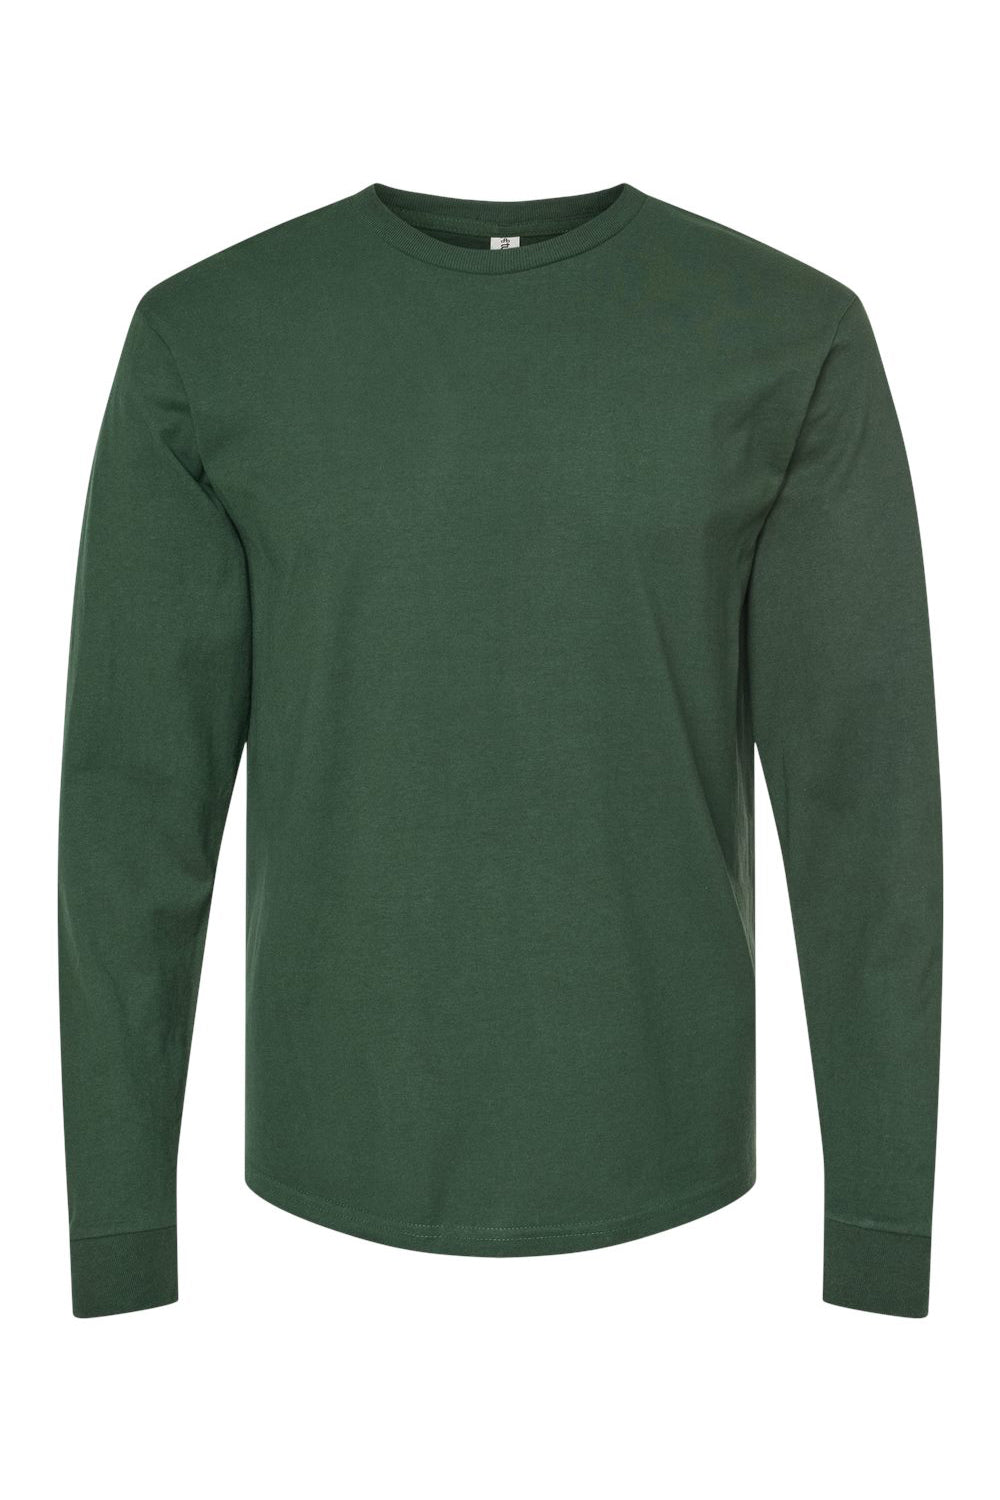 Tultex 291 Mens Jersey Long Sleeve Crewneck T-Shirt Hunter Green Flat Front